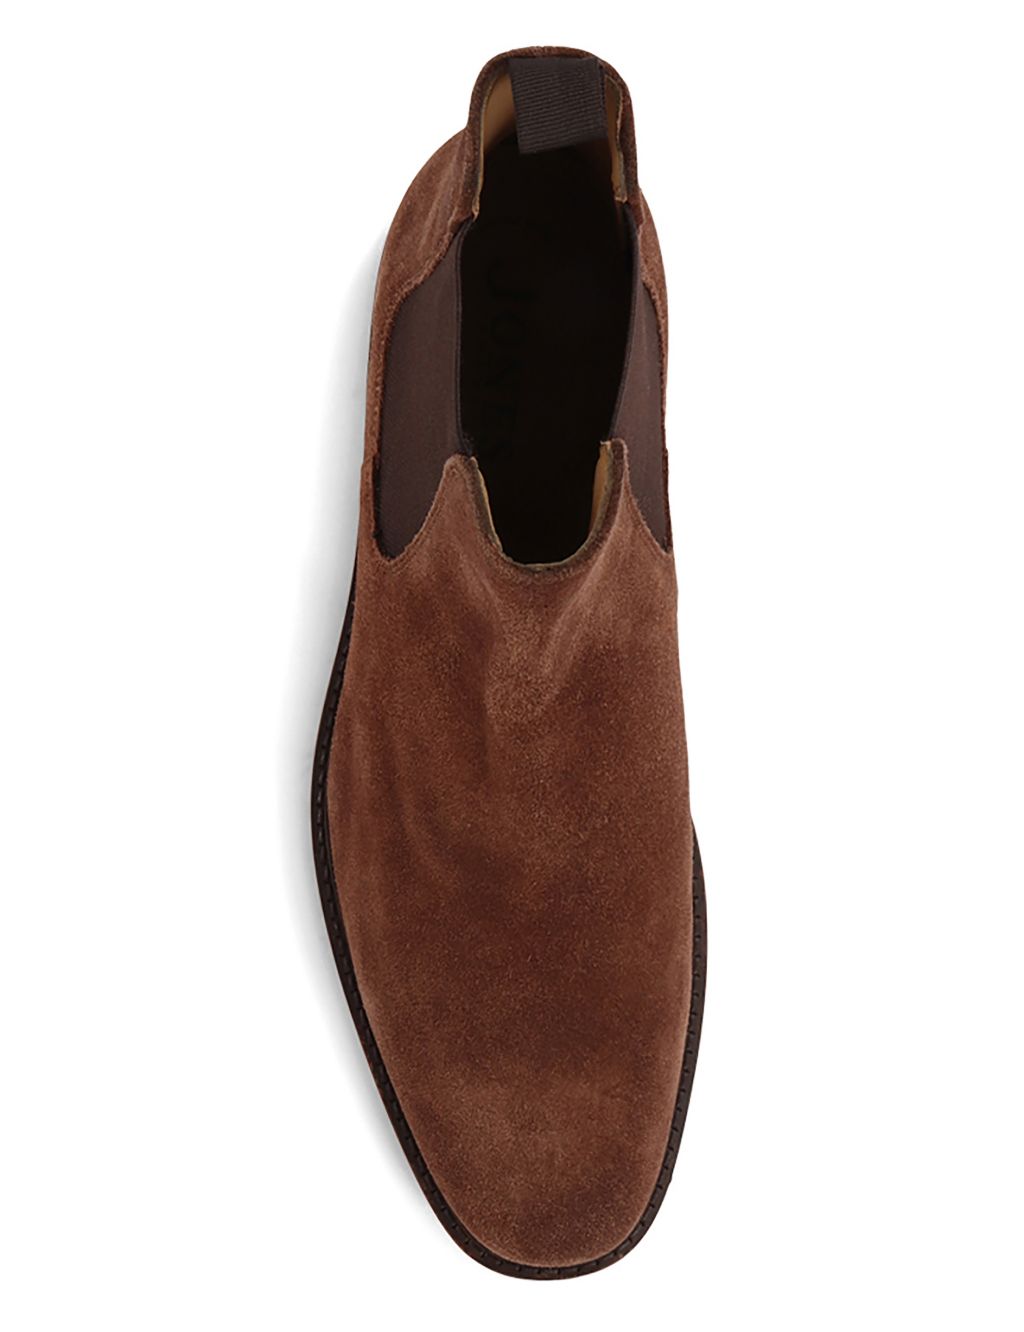 Leather Pull-on Chelsea Boots | Jones Bootmaker | M&S